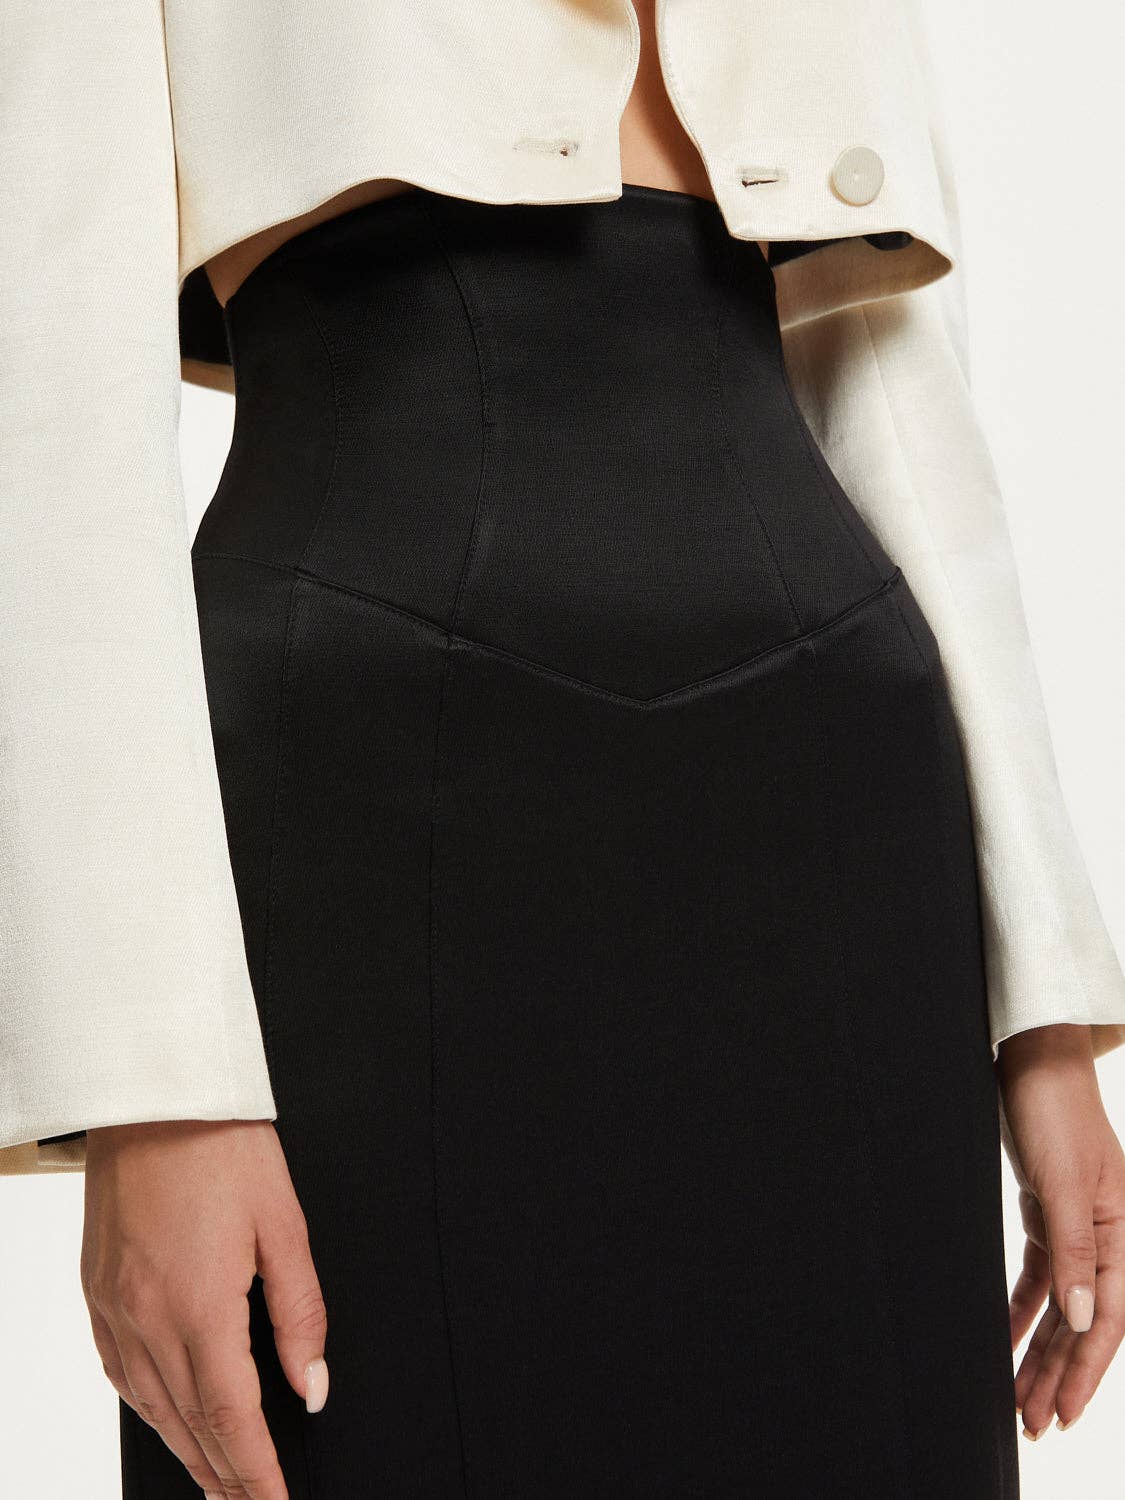 High-Waisted Midi Skirt